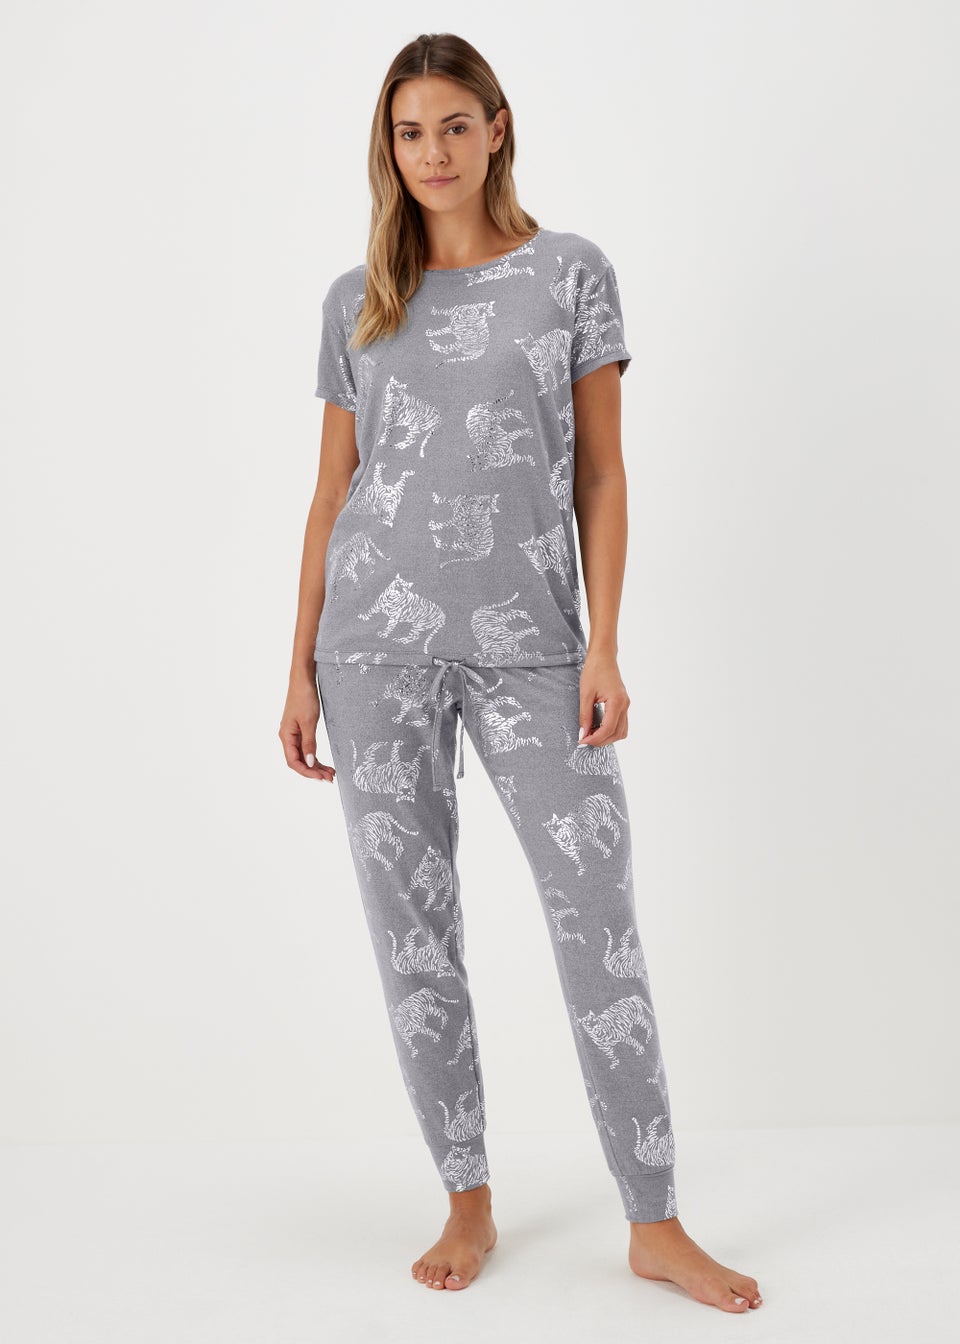 Charcoal Silver Foil Tiger Pyjama Set